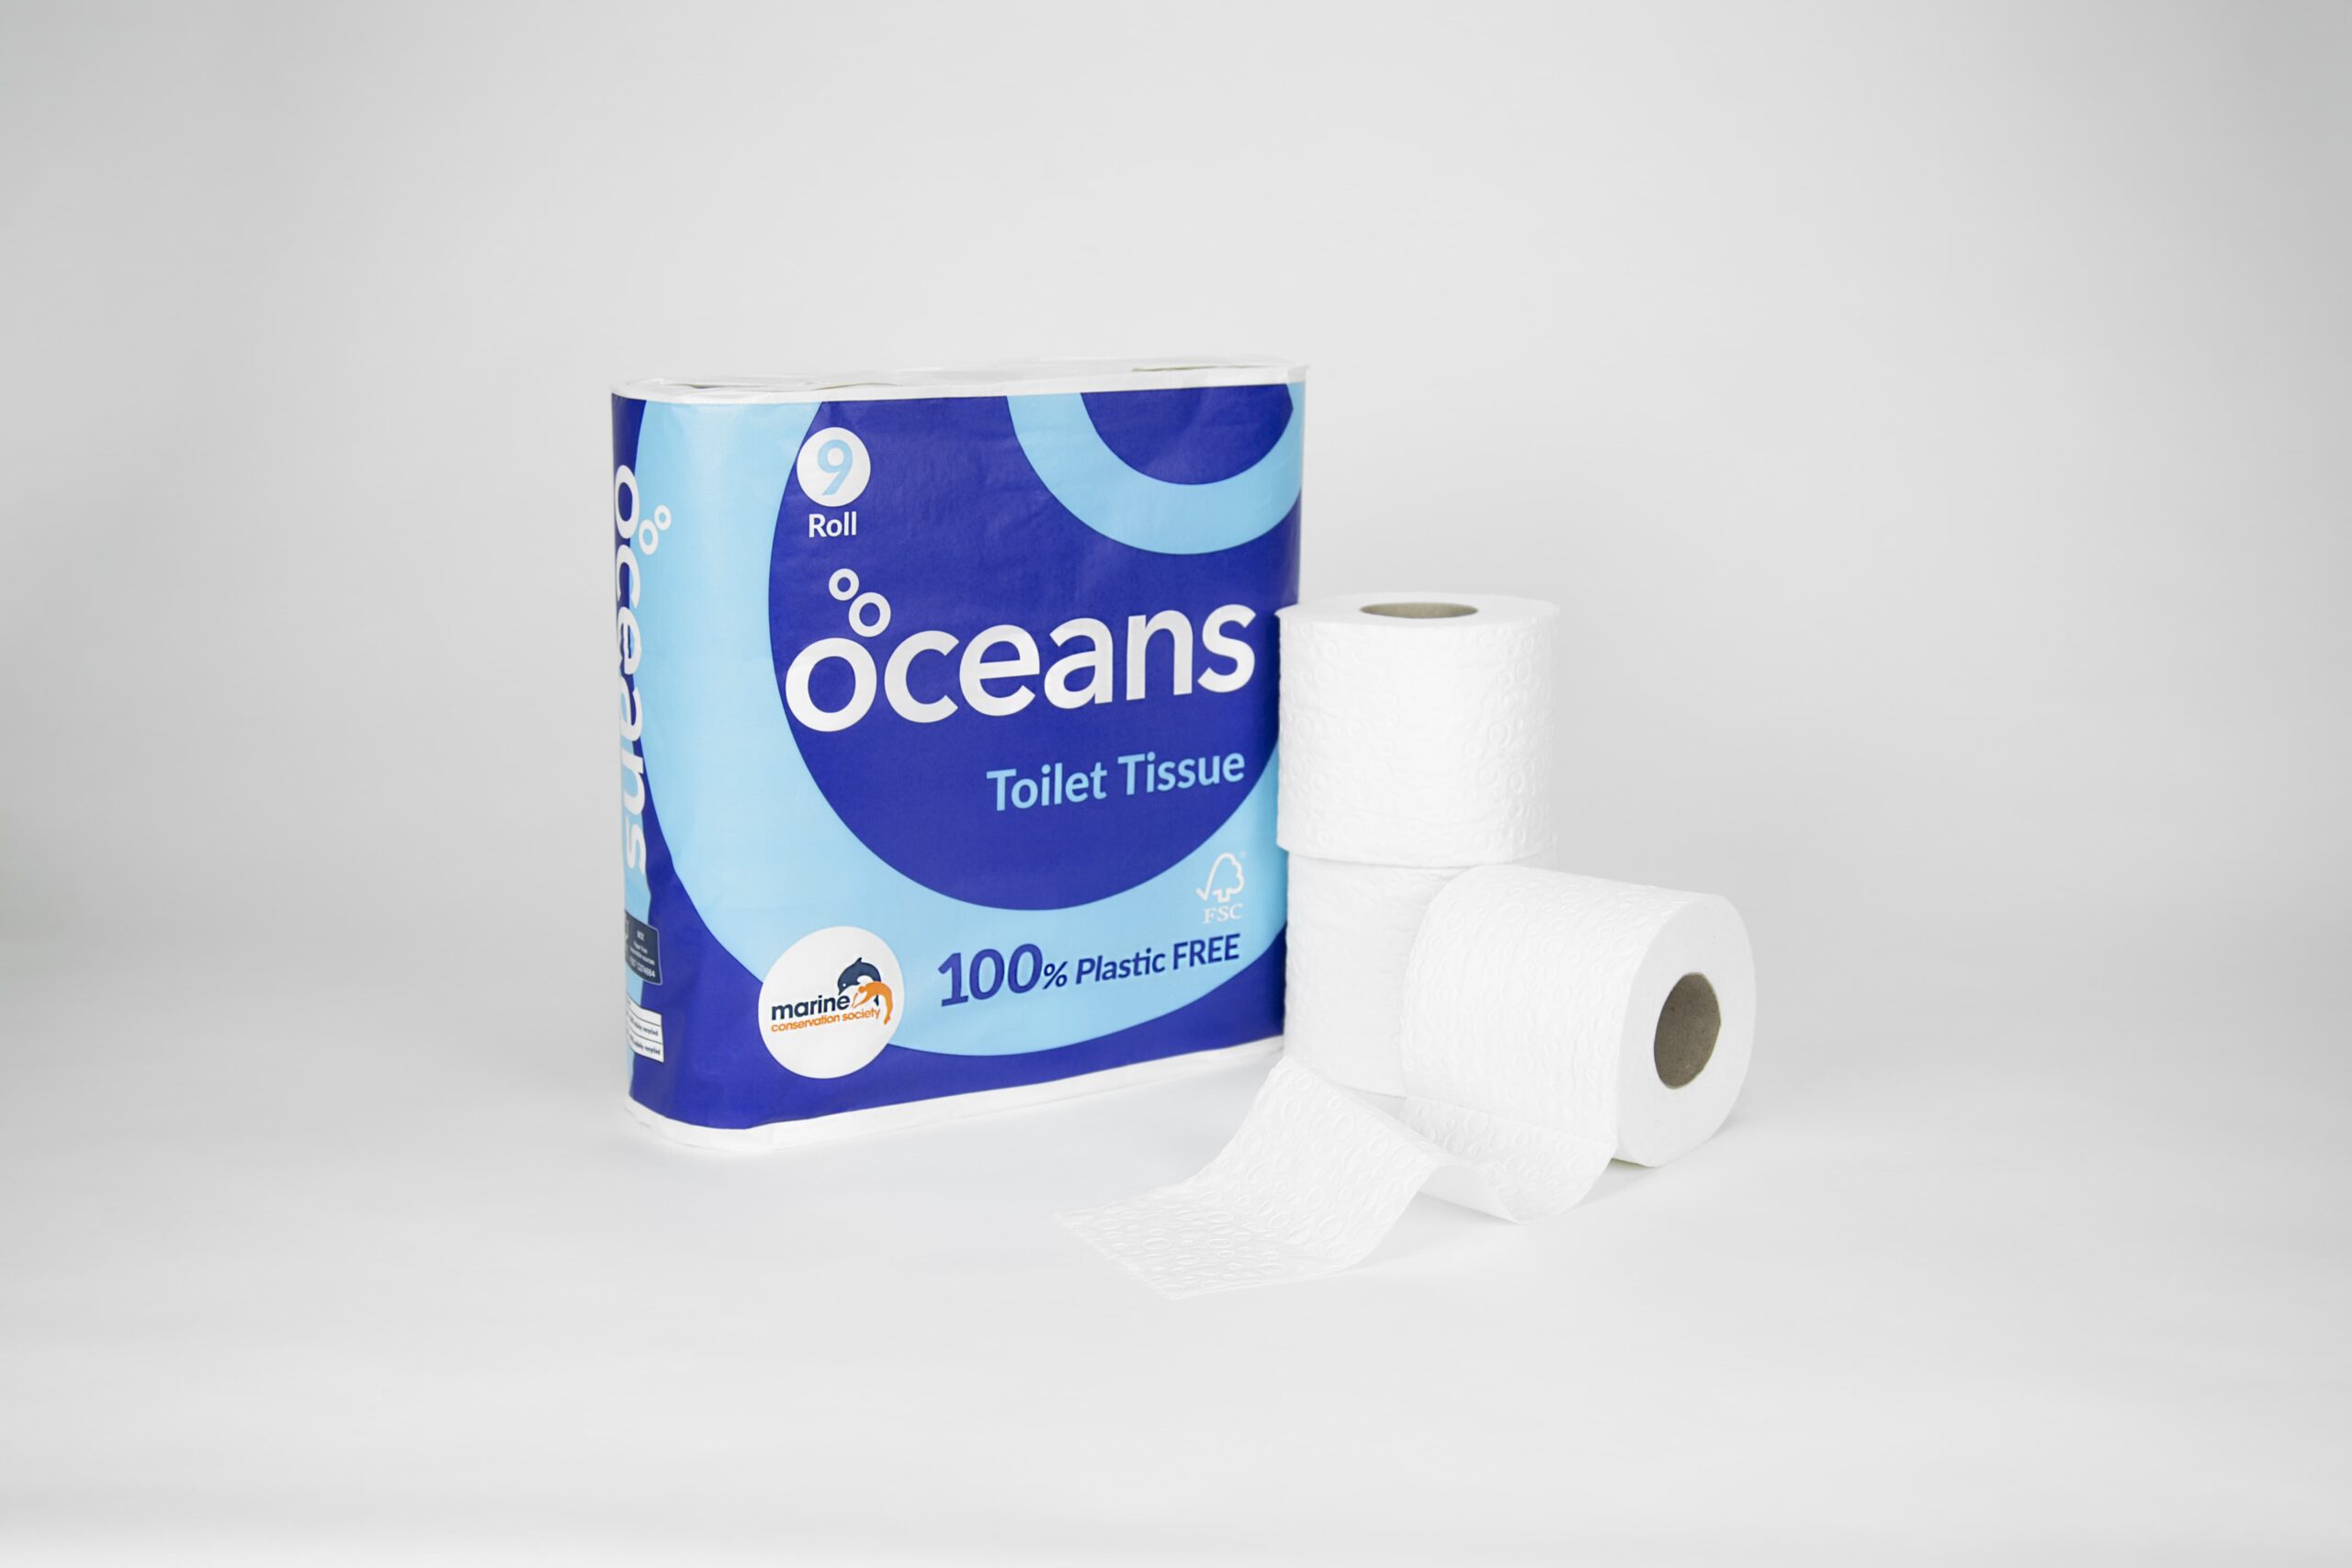 9-pack of Oceans eco toilet roll in plastic-free packaging alongside three single rolls